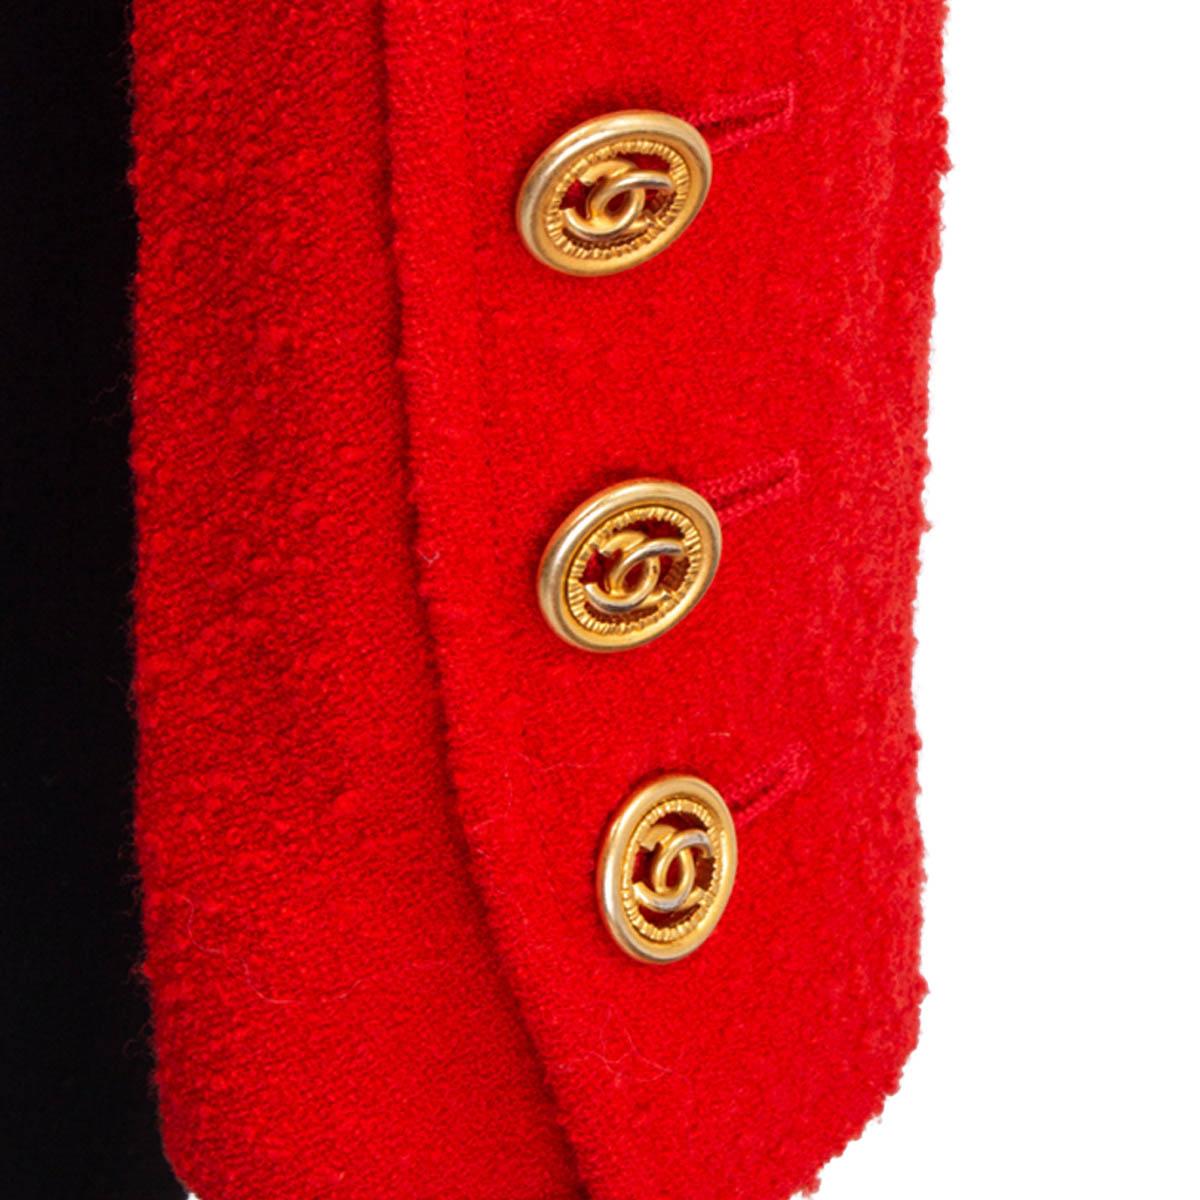 Women's CHANEL red wool blend VINTAGE CROPPED TWEED Blazer Jacket XS - S